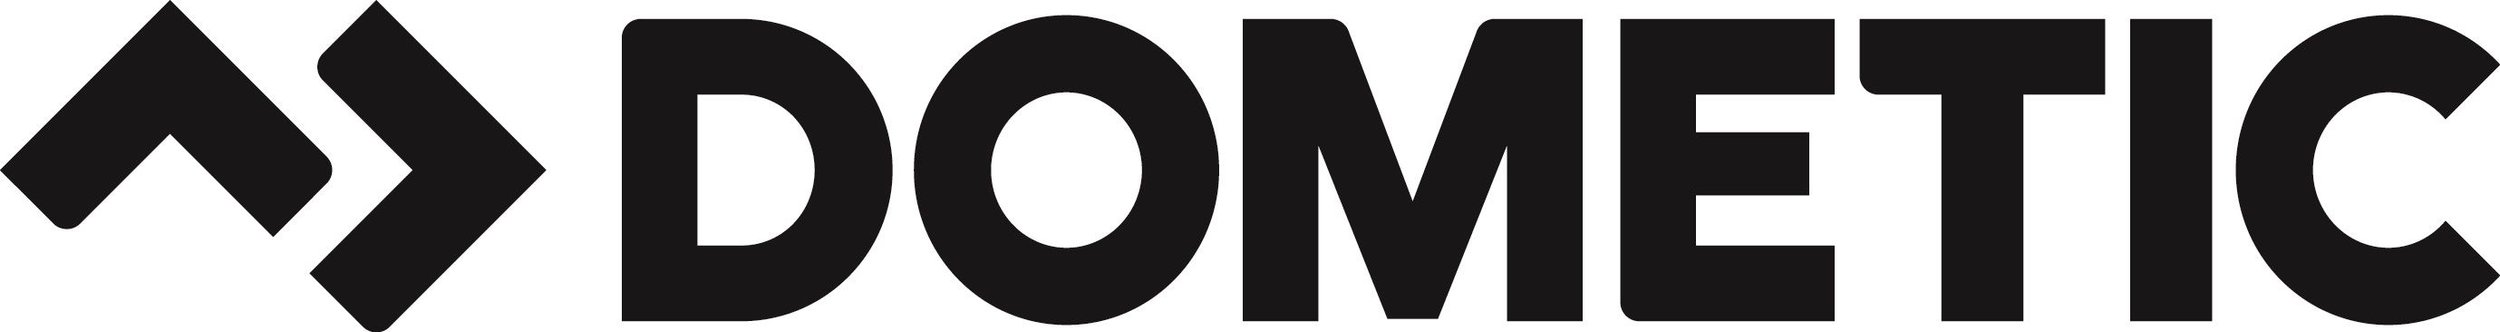 Dometic Logo.jpg